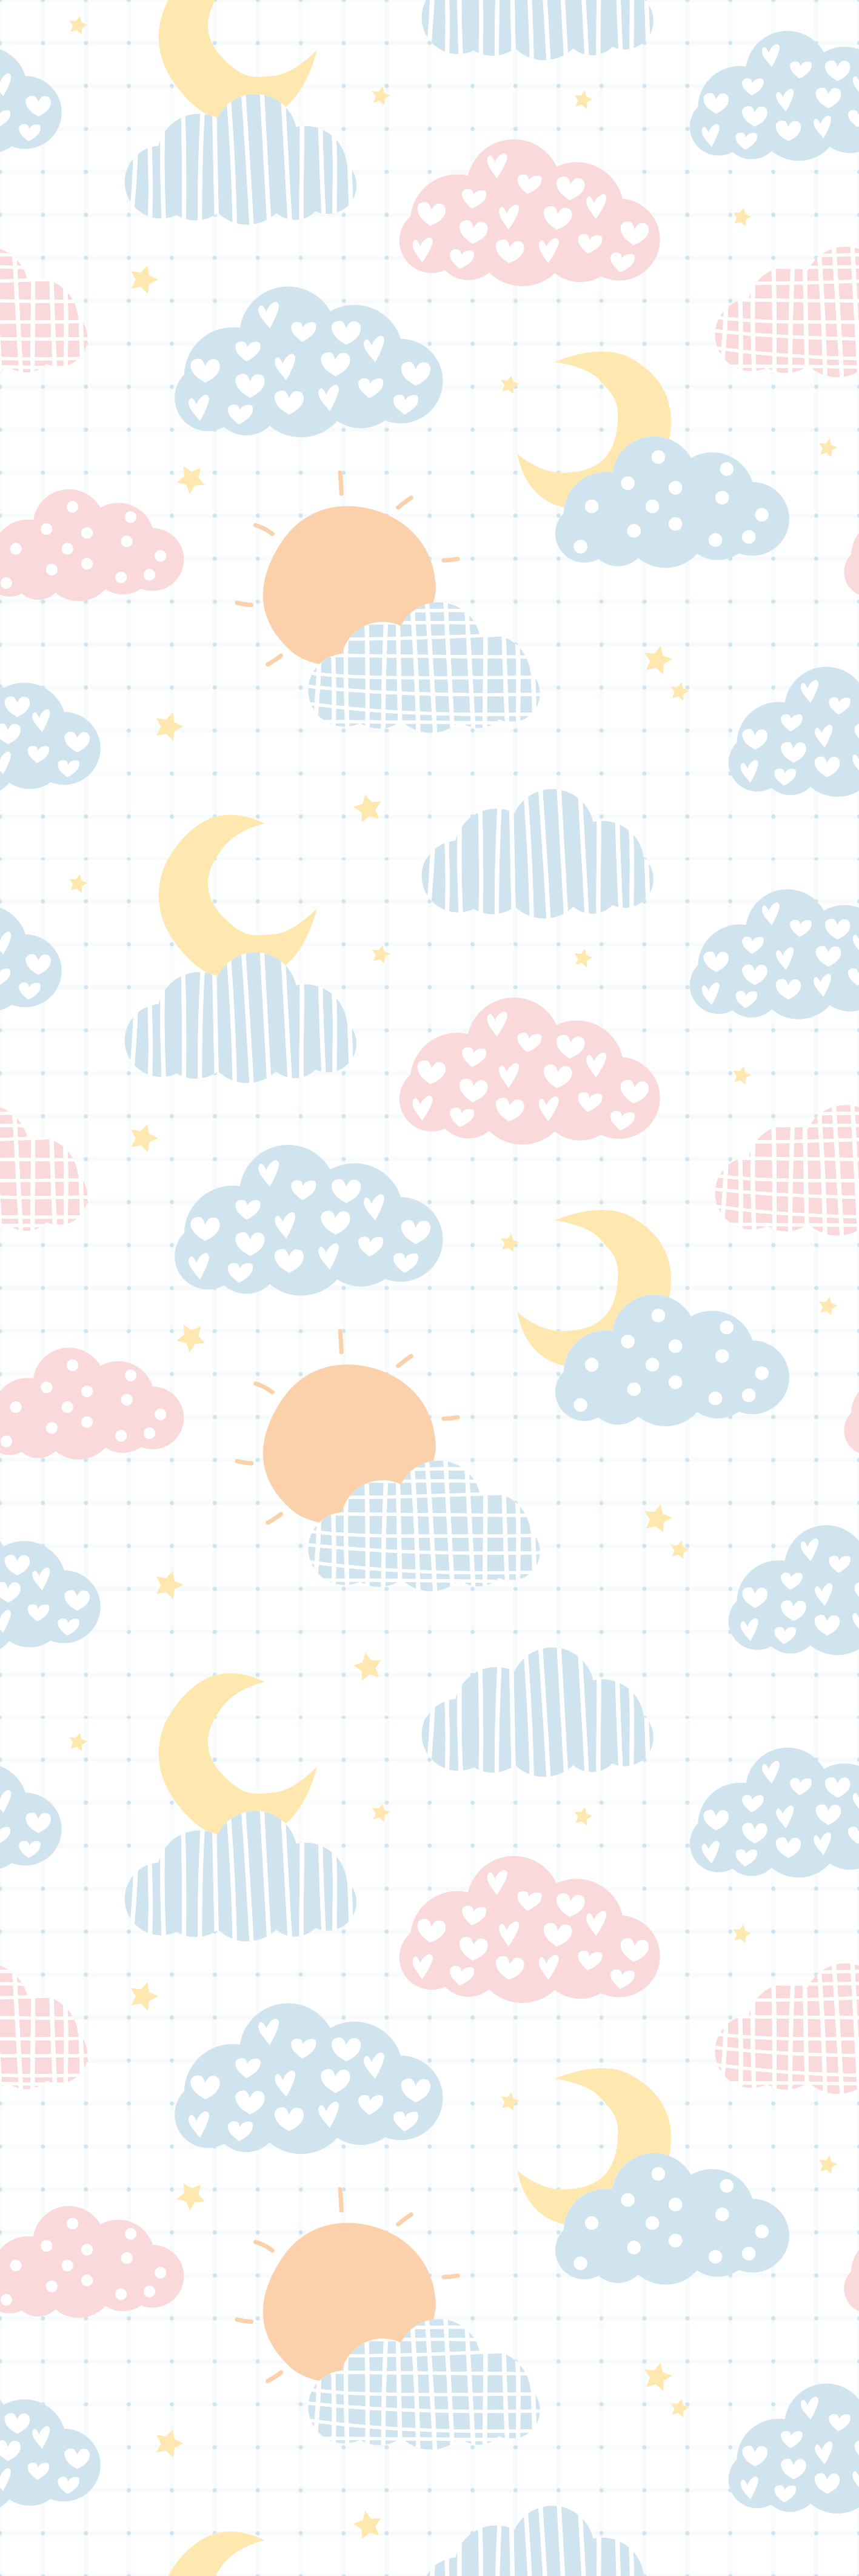 Cute Cloudy Patterns Kids Wallpaper - TenStickers